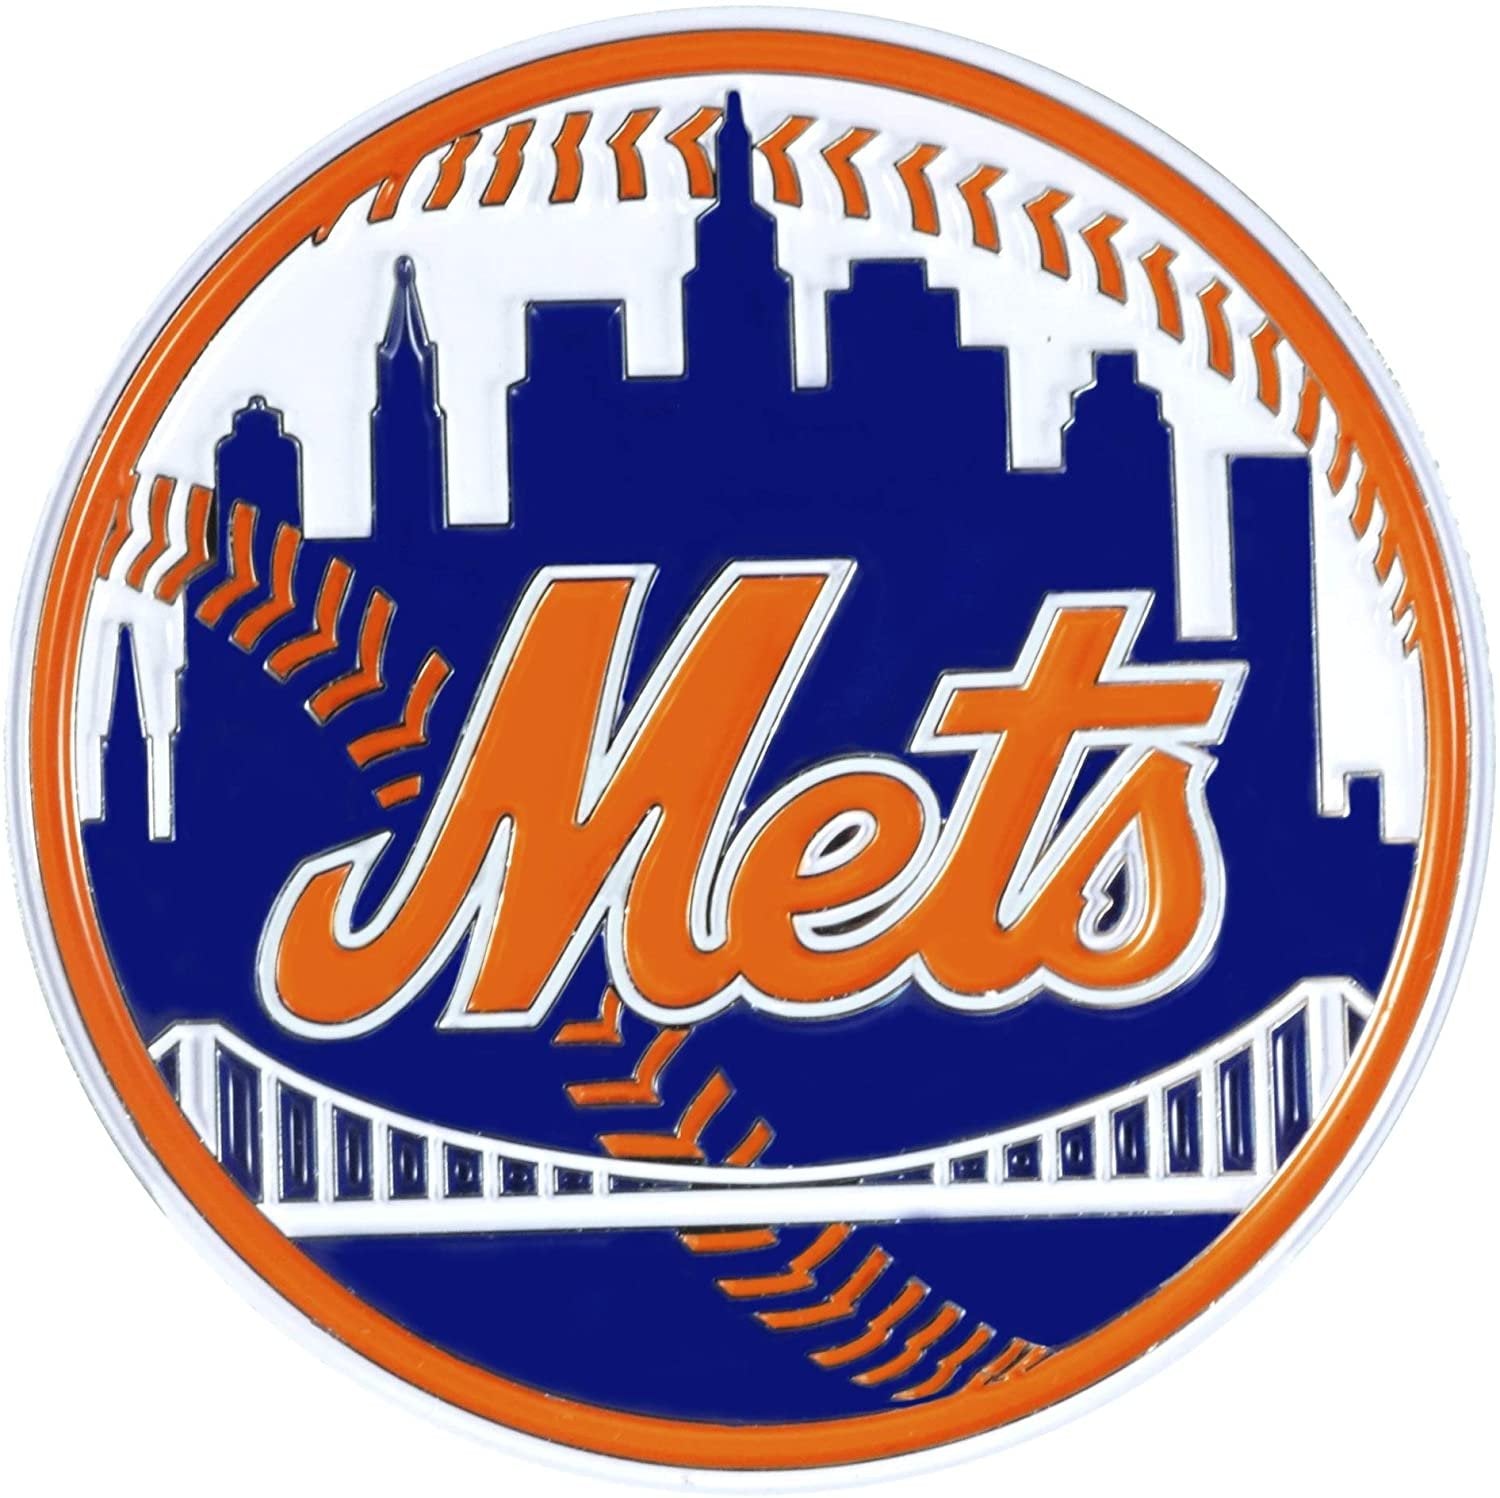 New York Mets Premium Solid Metal Raised Auto Emblem, Team Color, Shape Cut, Adhesive Backing